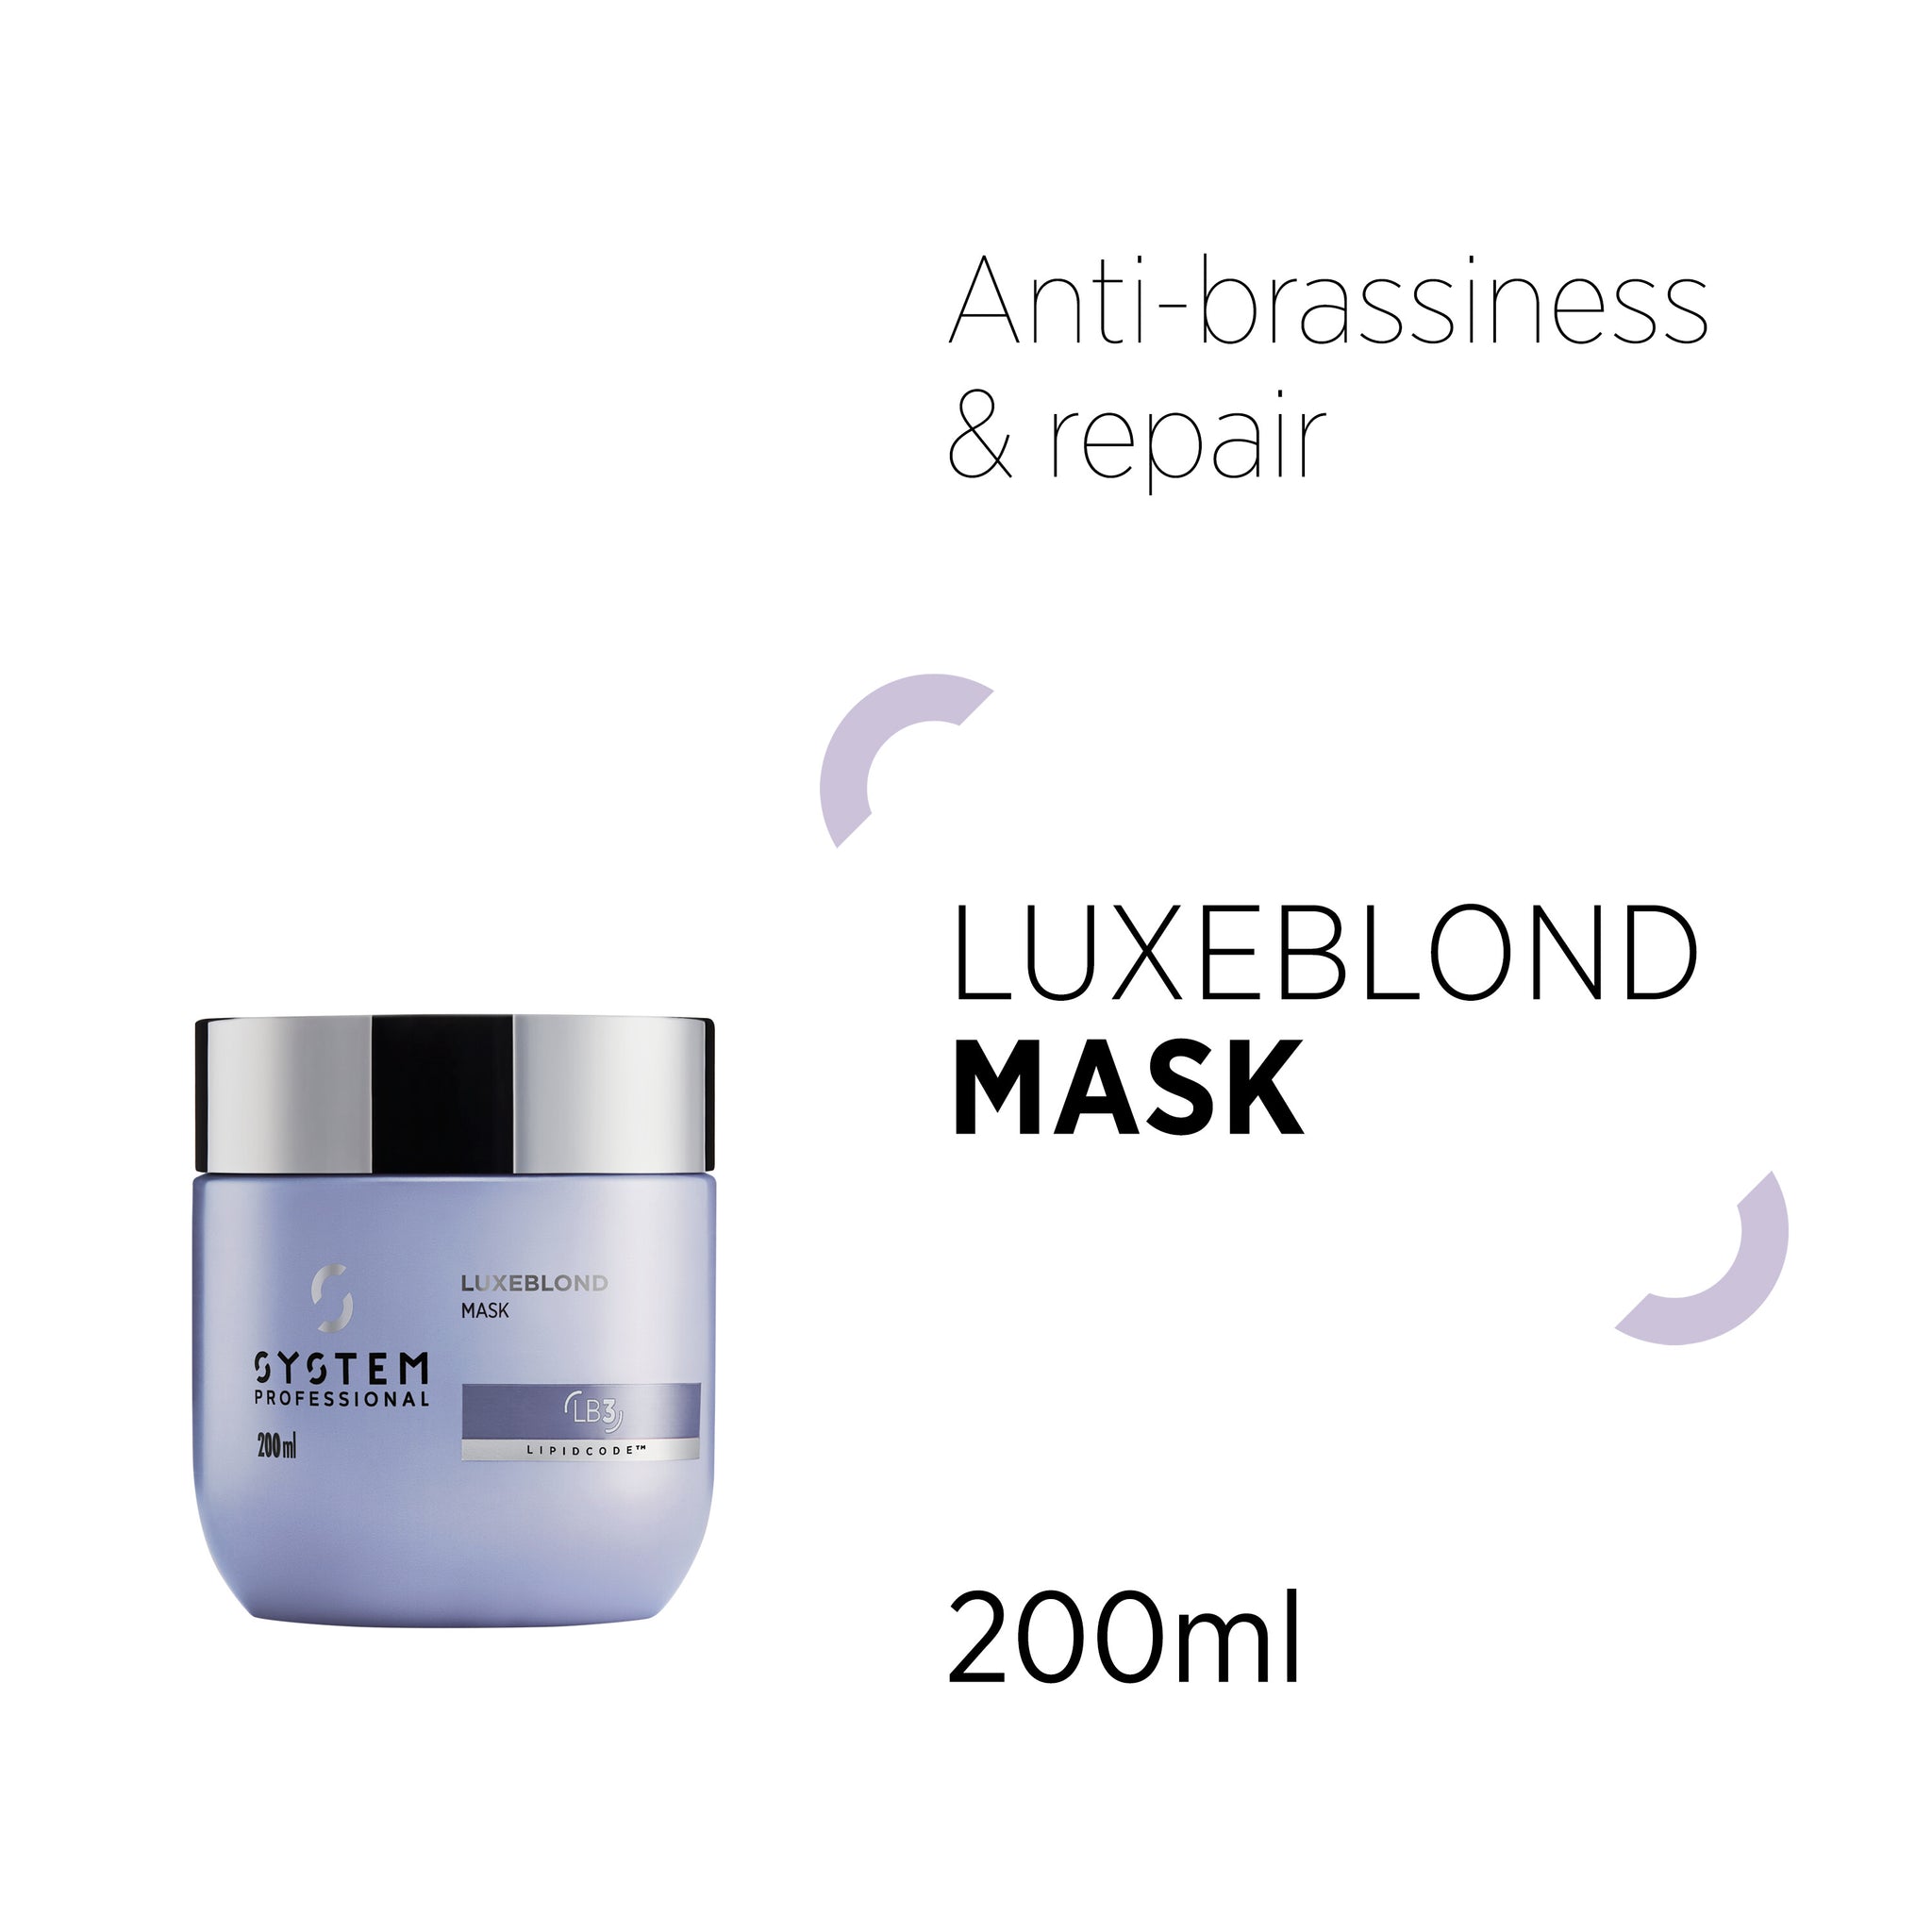 System Professional LuxeBlond Mask 200ml